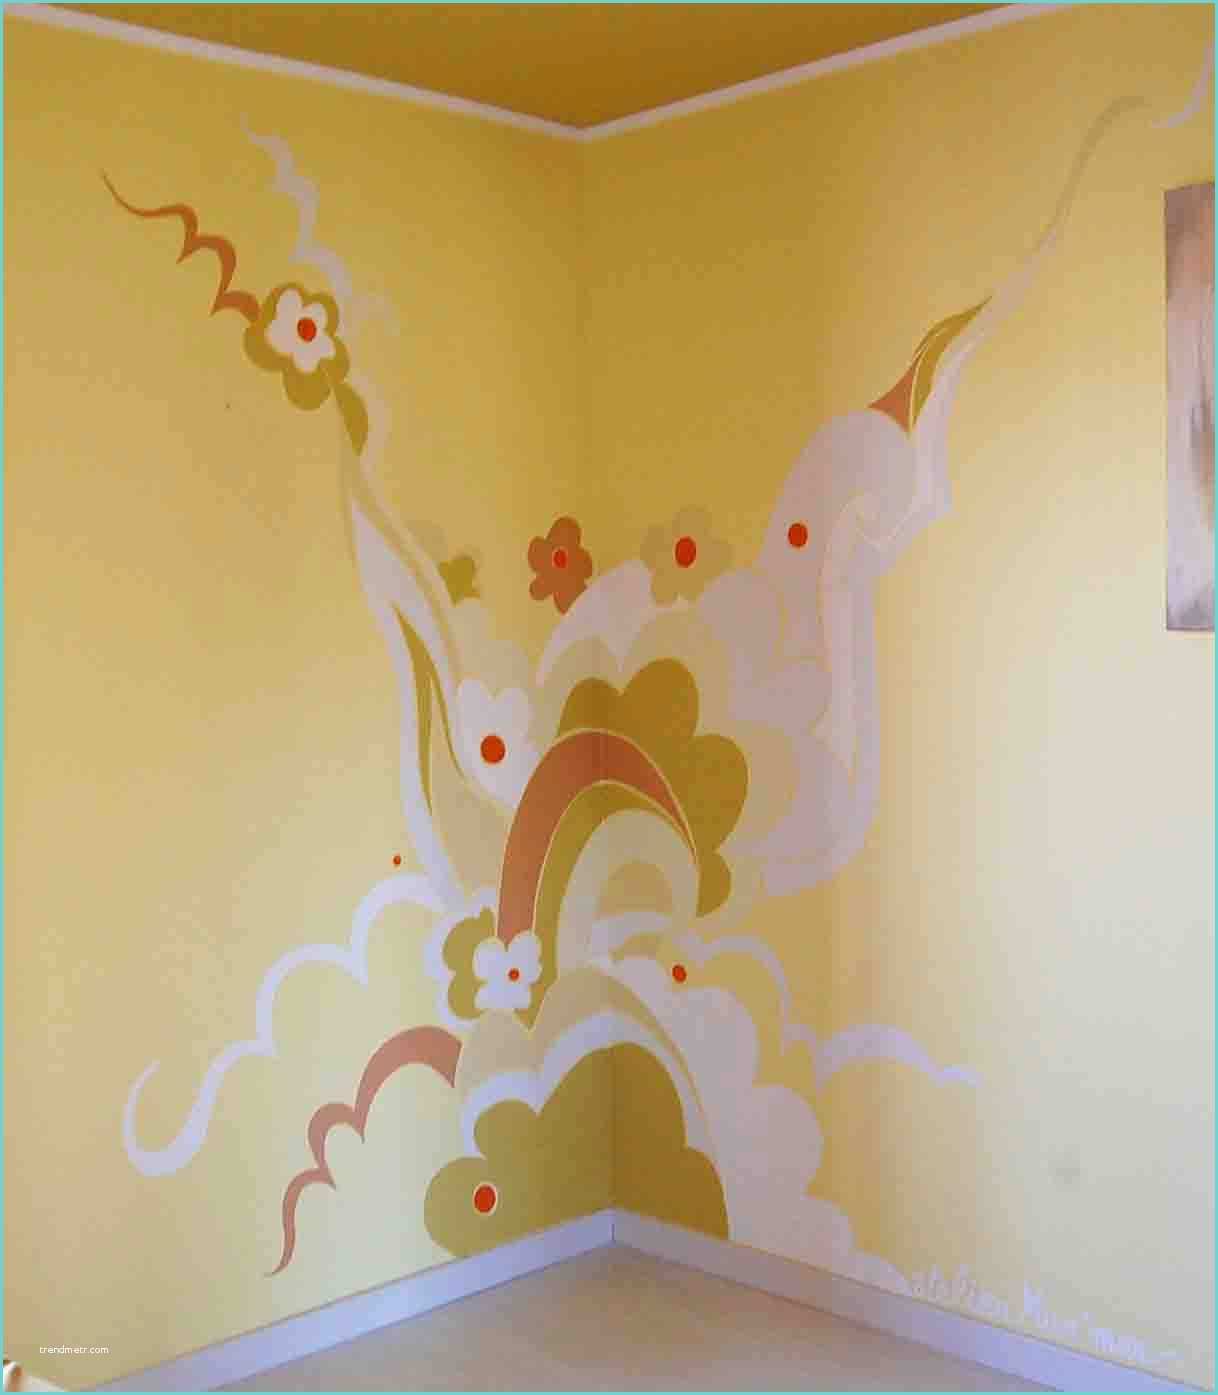 Dessin Mural Chambre Adulte Dessin Mural Chambre Adulte Simple Peinture Murale Quelle